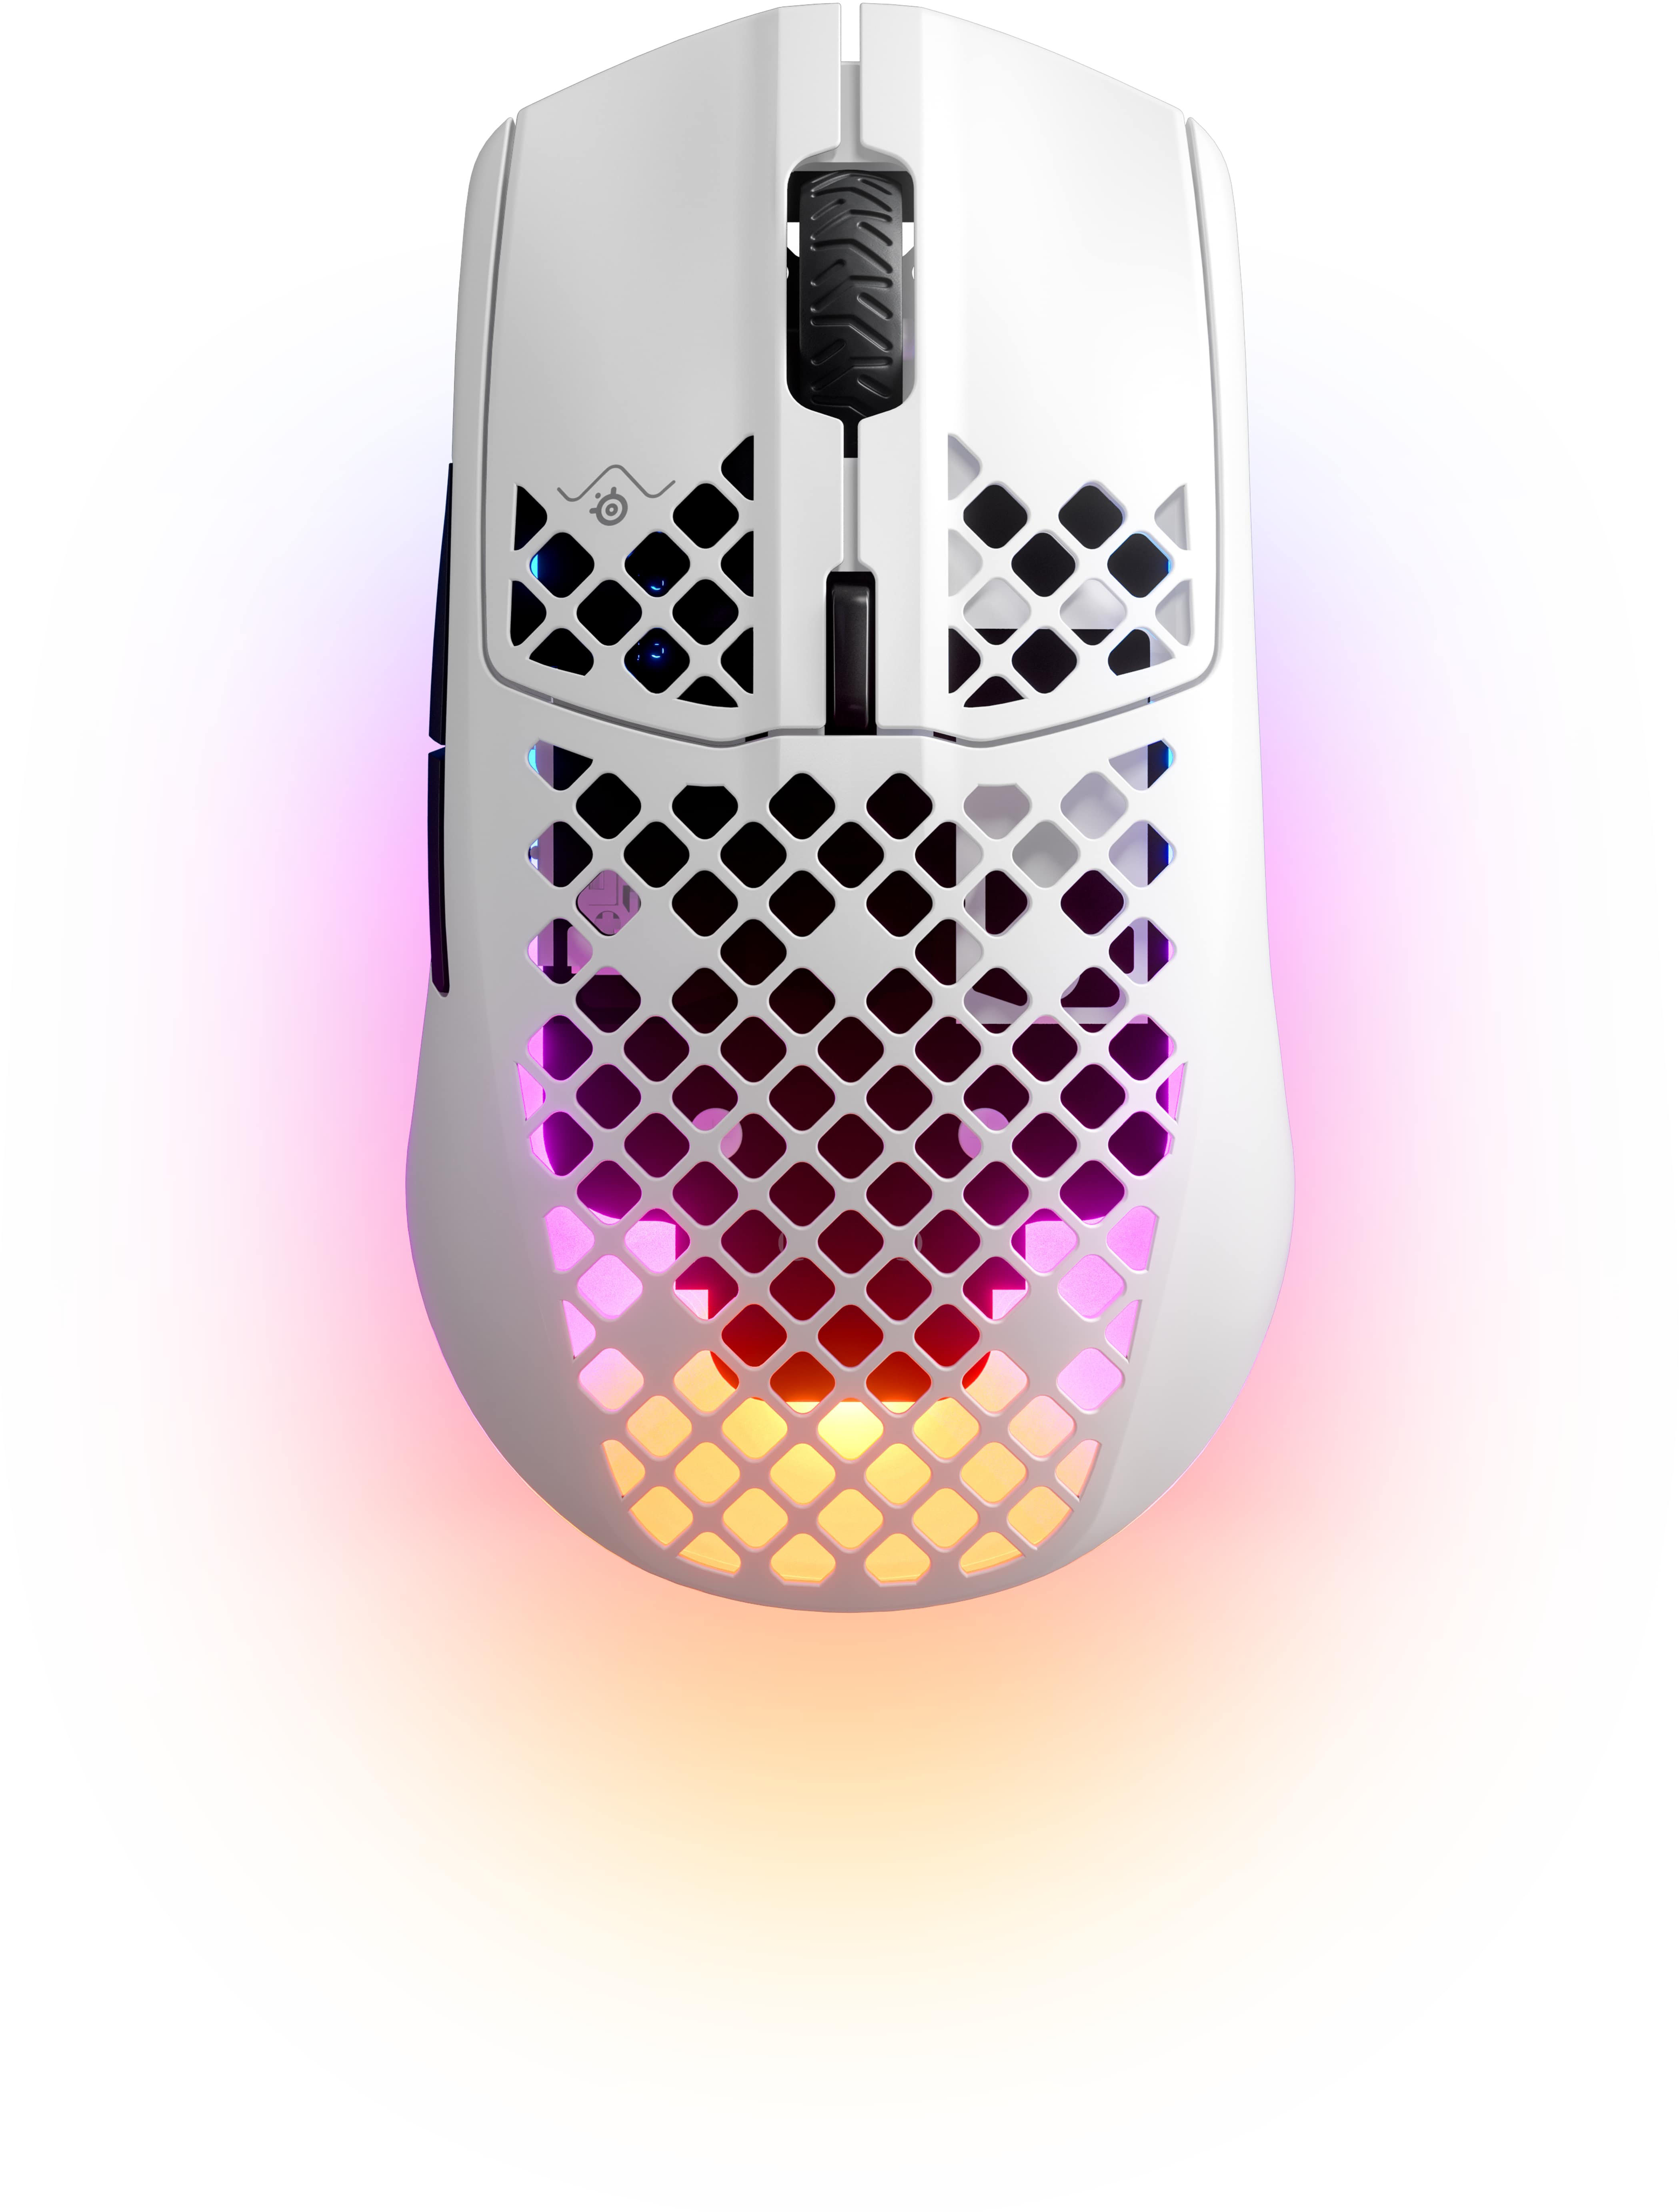 La souris gaming ultralégère Steelseries Aerox 3 Wireless à prix tout doux  - Bon plan - Gamekult